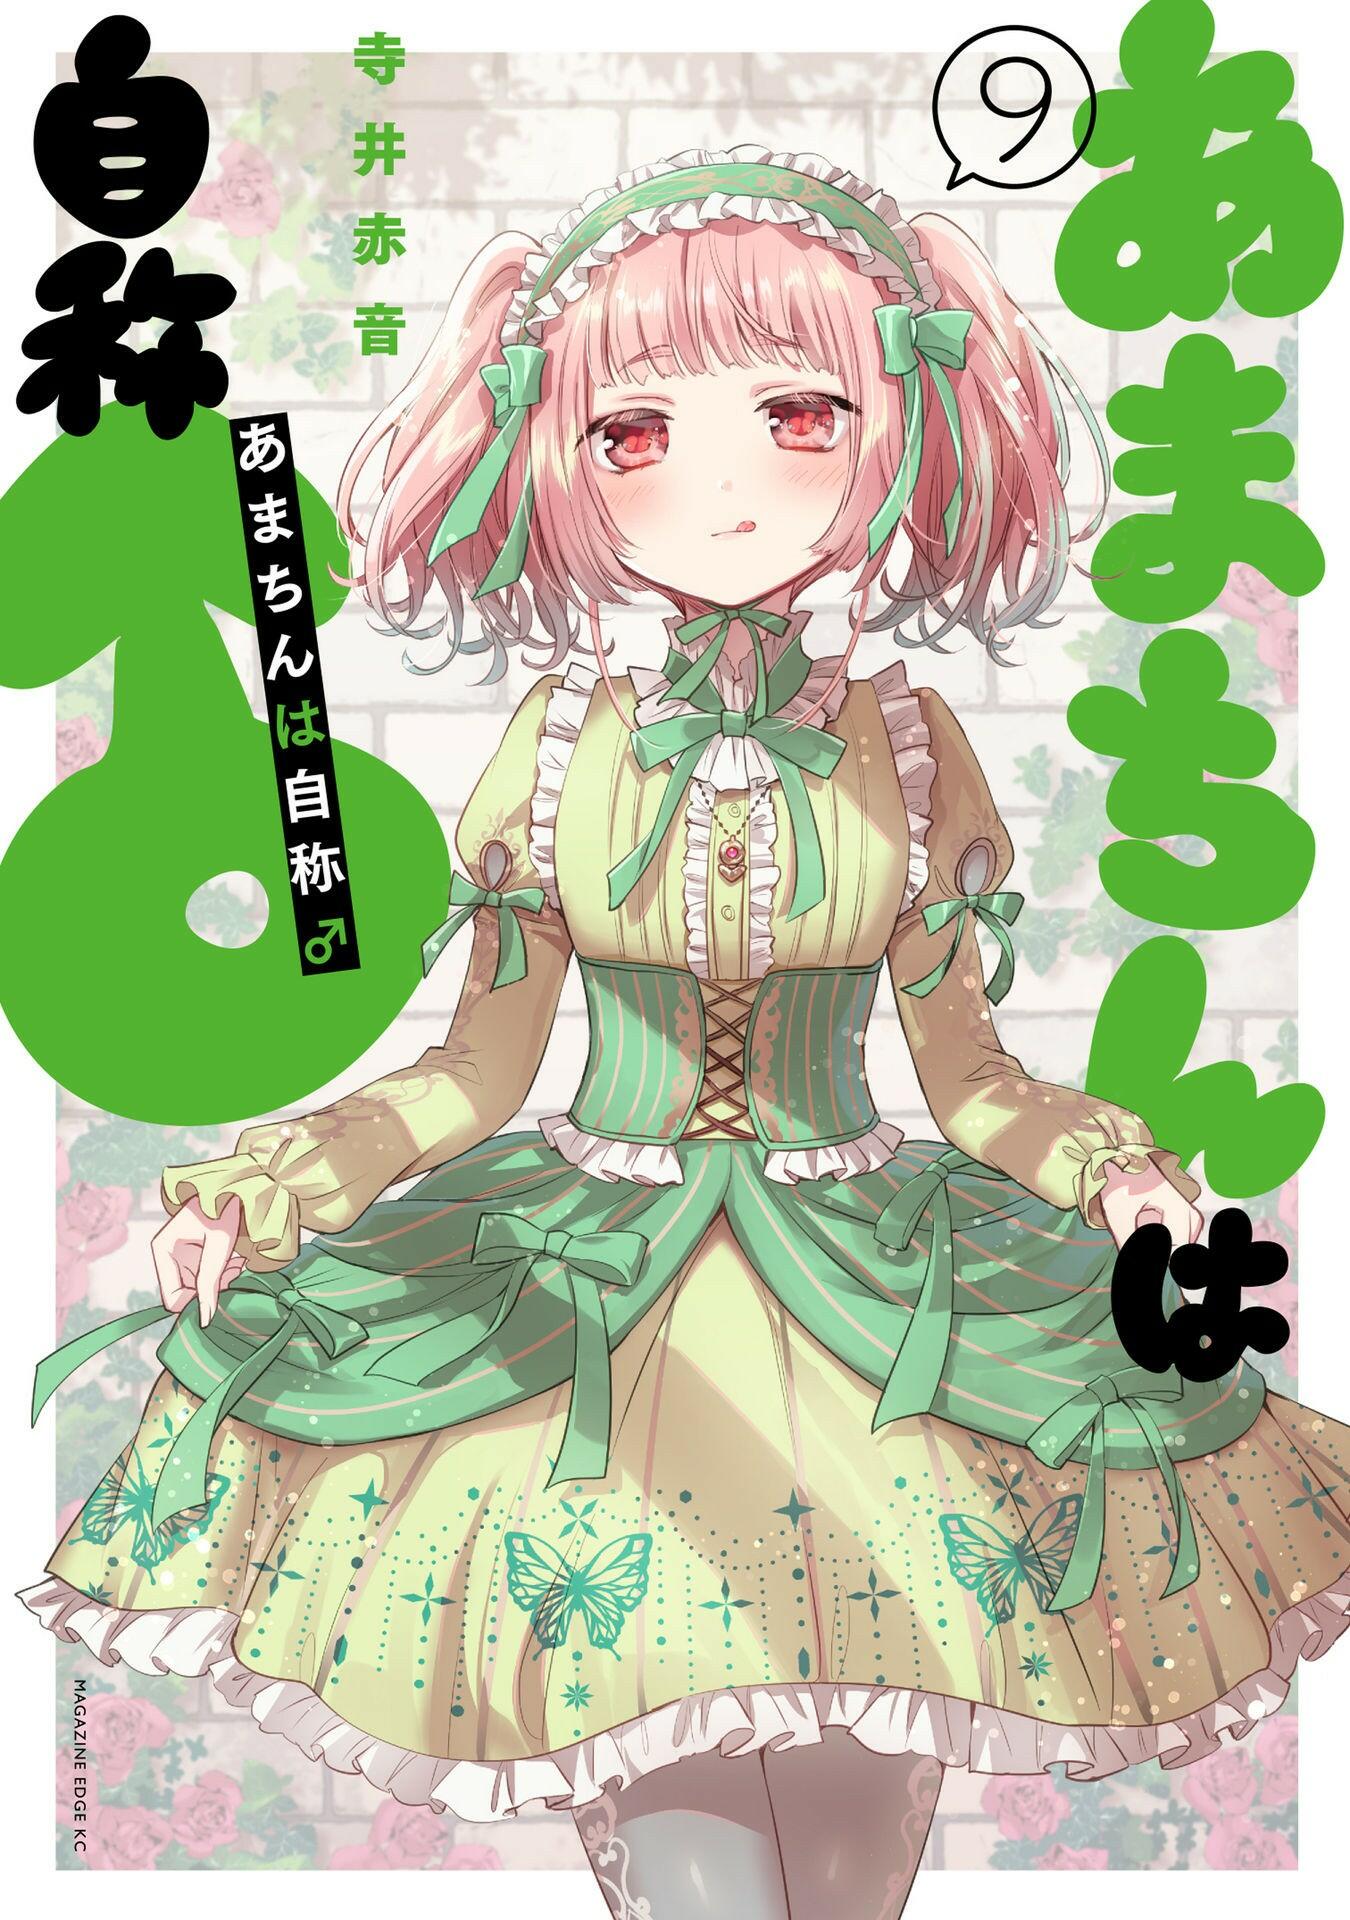 Read Amachin Wa Jishou ♂ Chapter 30: Maid Cafe - Manganelo